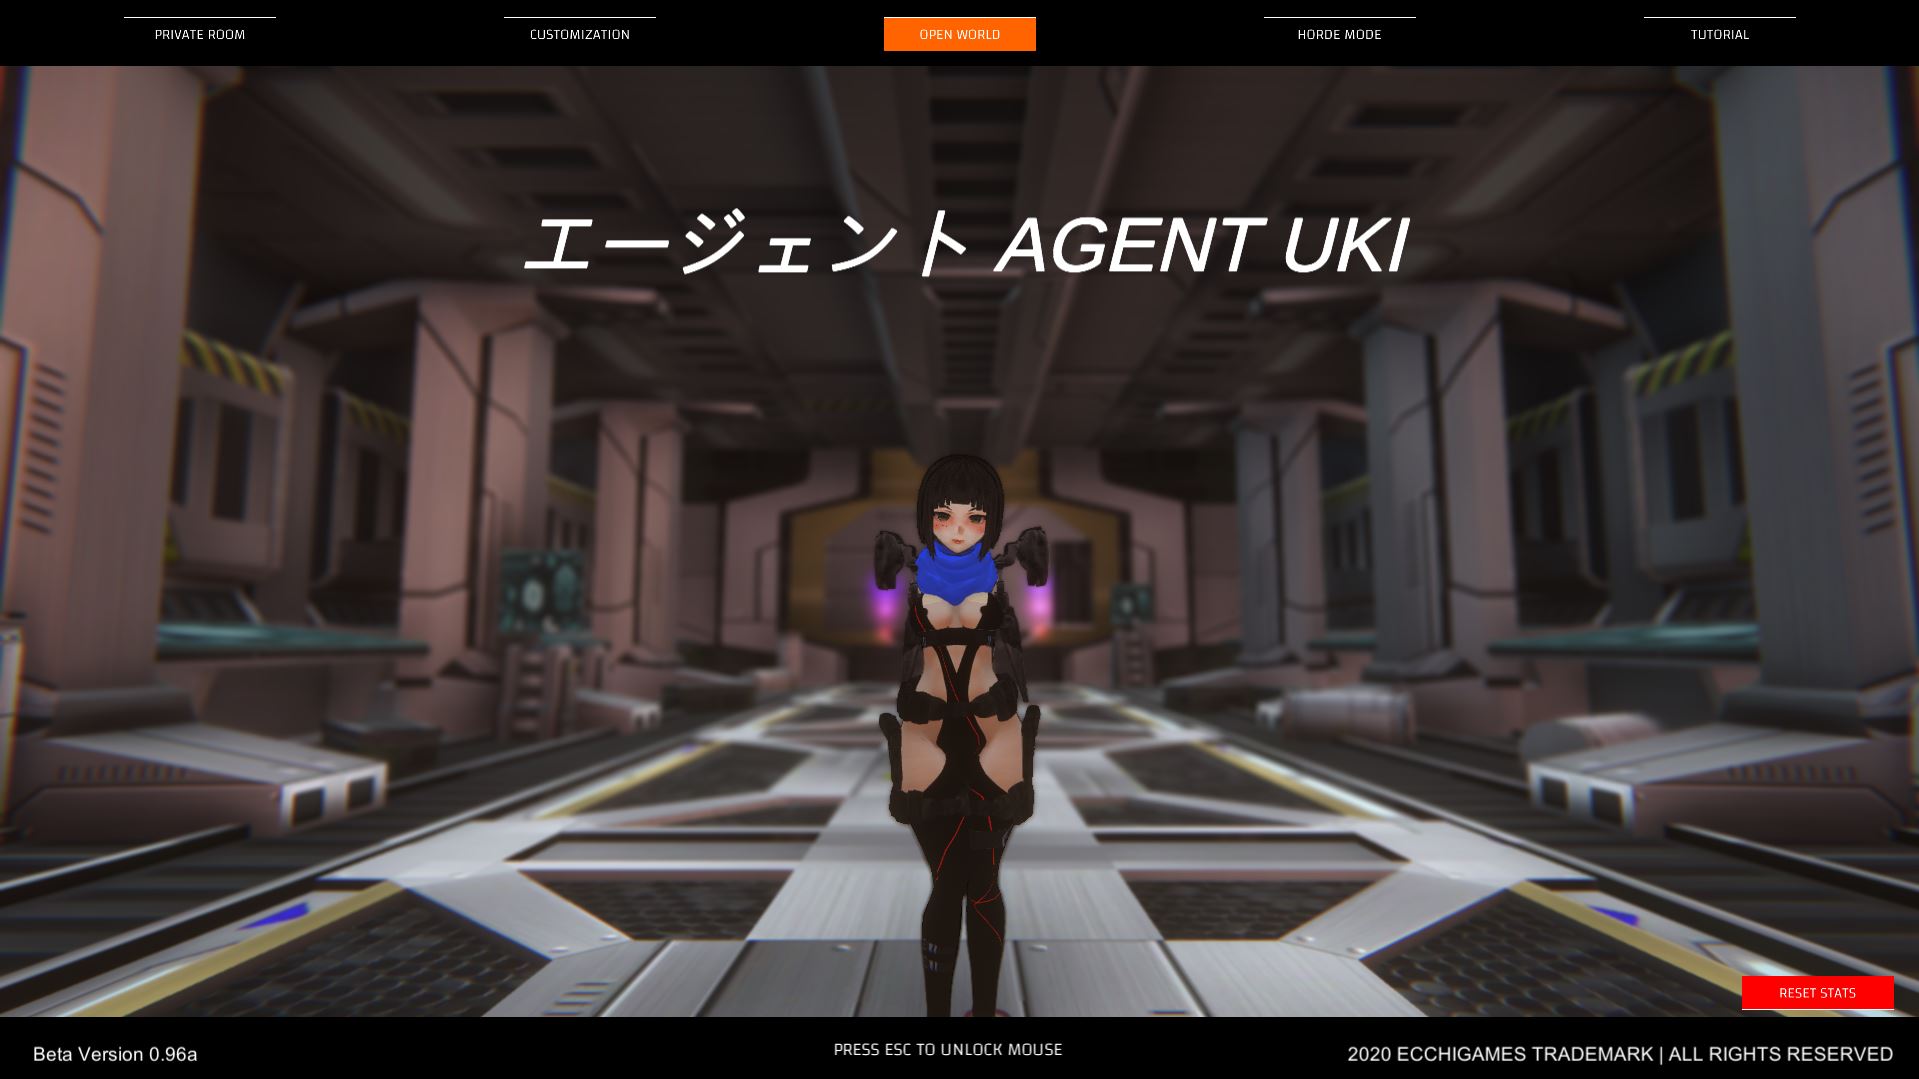 Open Bf Video Download - Agent Uki Unity Porn Sex Game v.0.96 Download for Windows